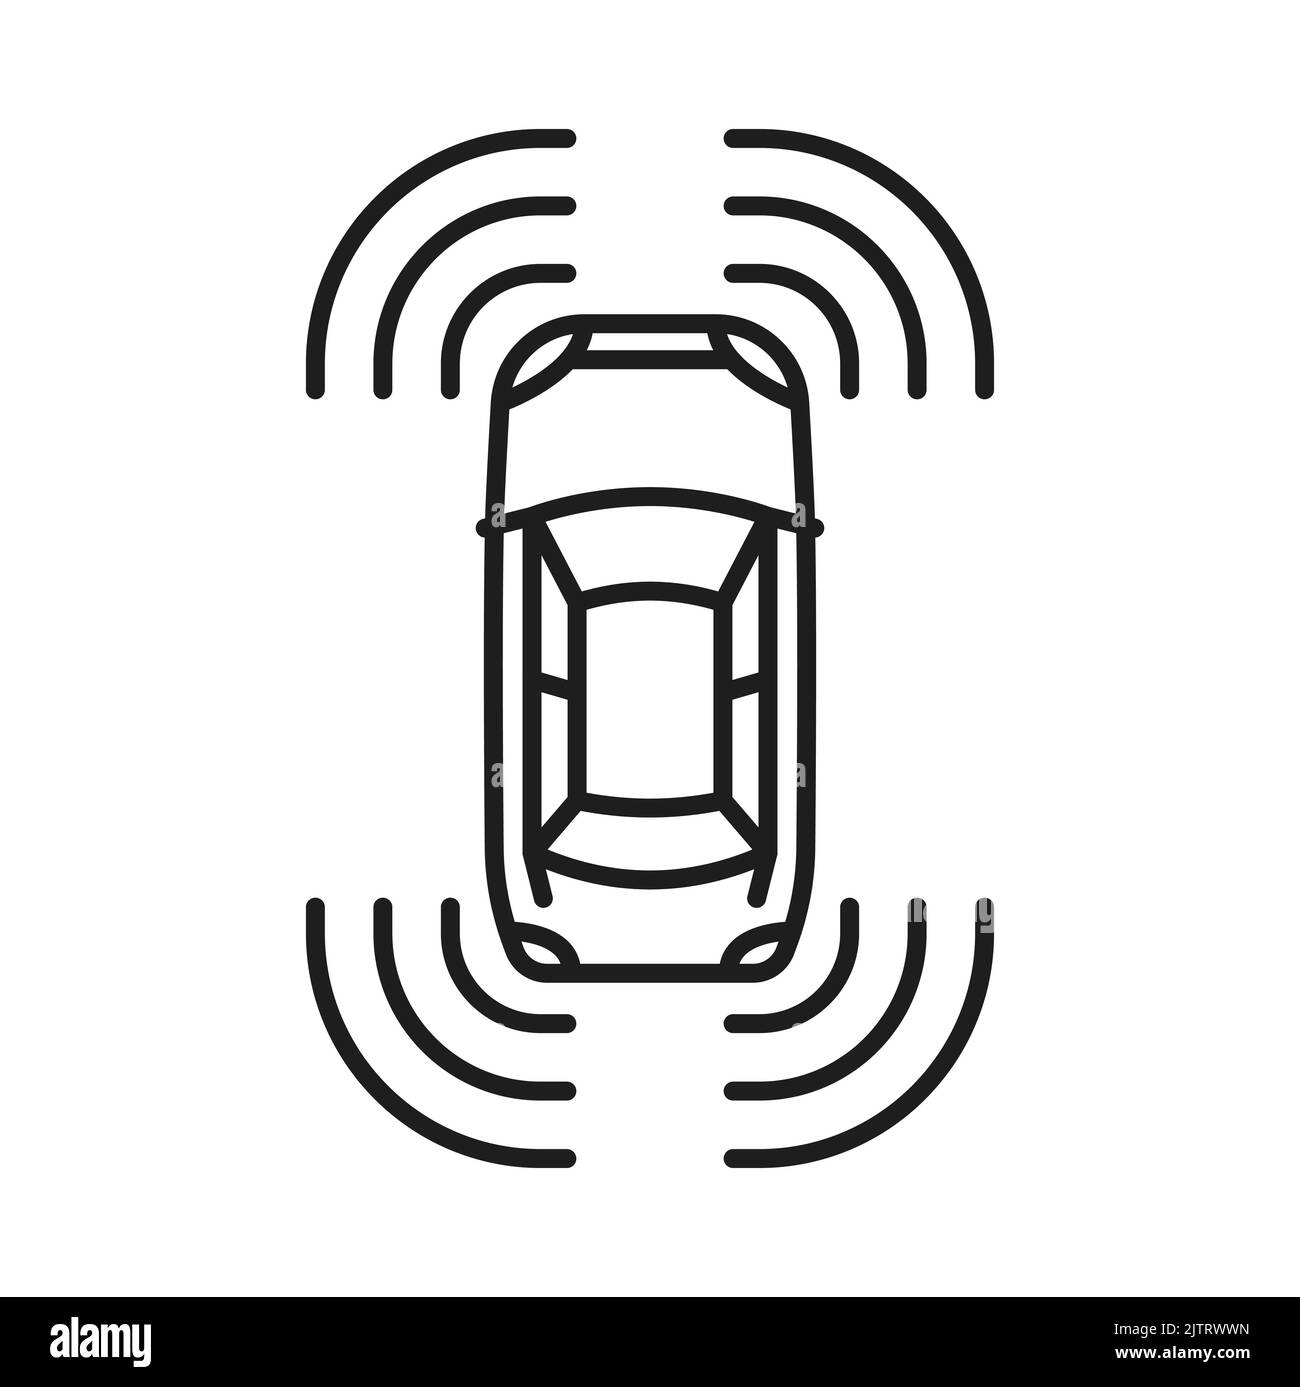 Fahrerloses Auto-Symbol, selbstfahrender autonomer intelligenter Transport, Vektor-KI-Antrieb. Fahrerloses Auto oder mobiles Fahrzeug mit Sensorsteuerung und Datensignalen, Stock Vektor